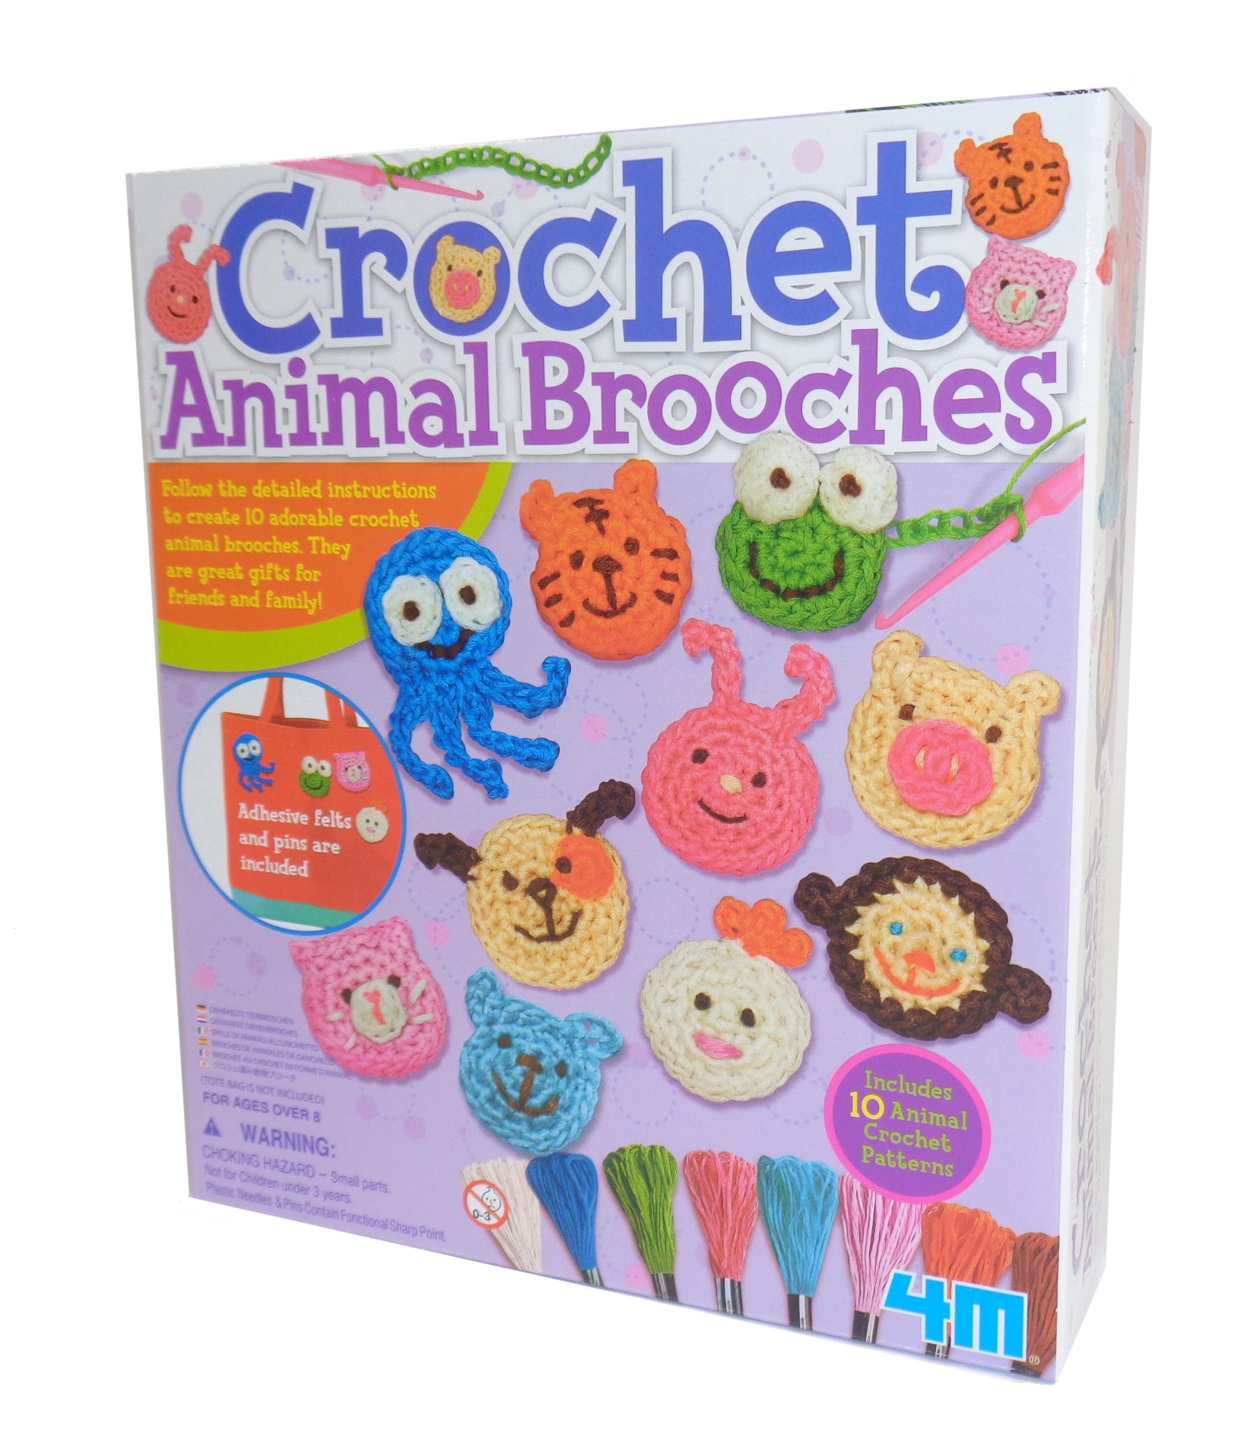 Childs crochet animal brooches craft kit-0